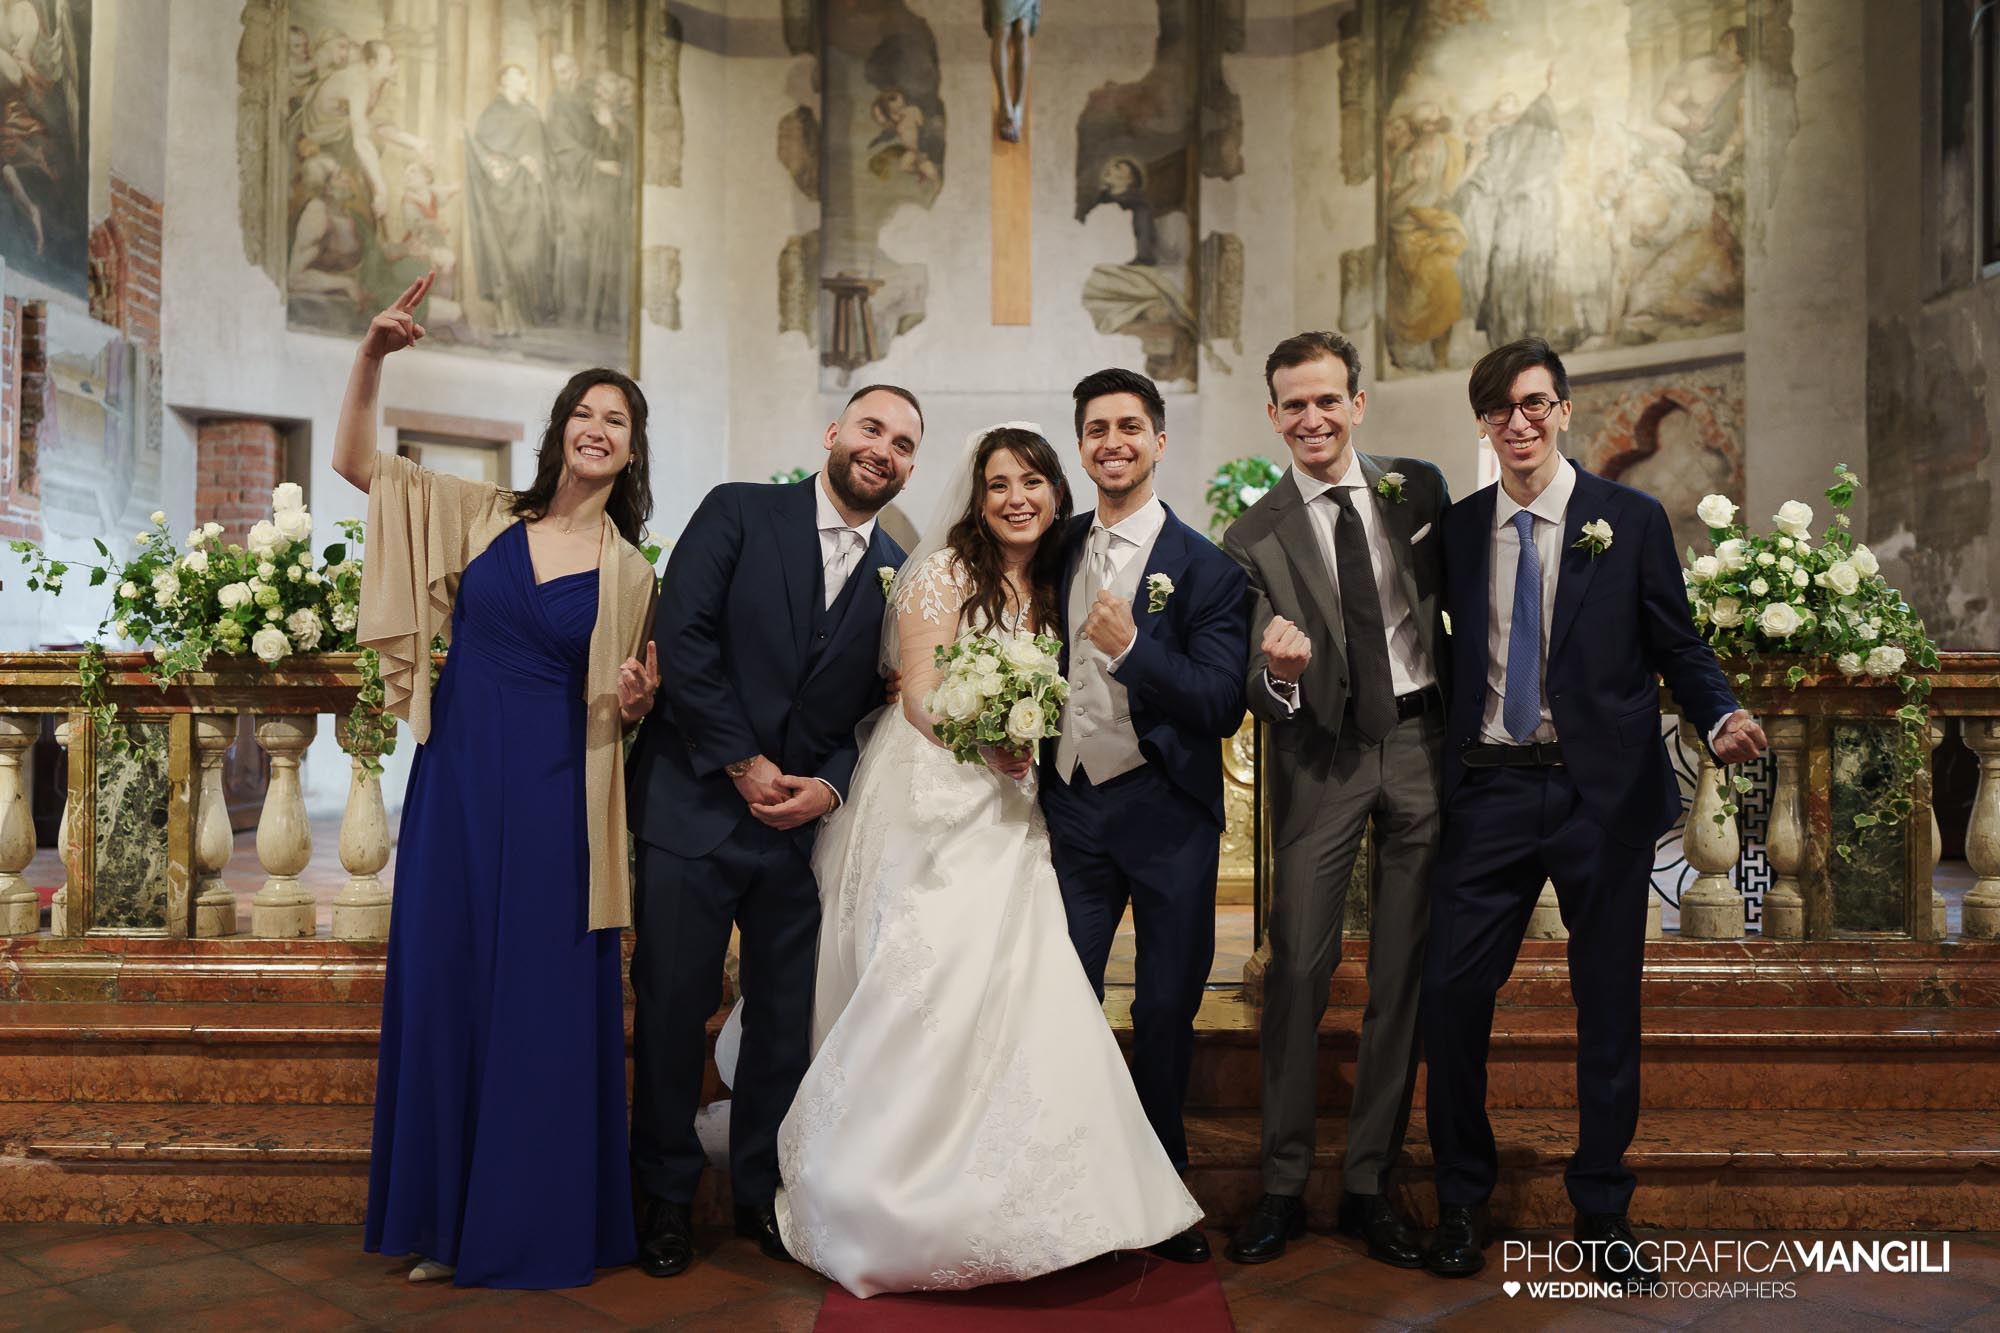 038 foto nozze wedding reportage sposi rito religioso testimoni chiesa milano chiara oliviero